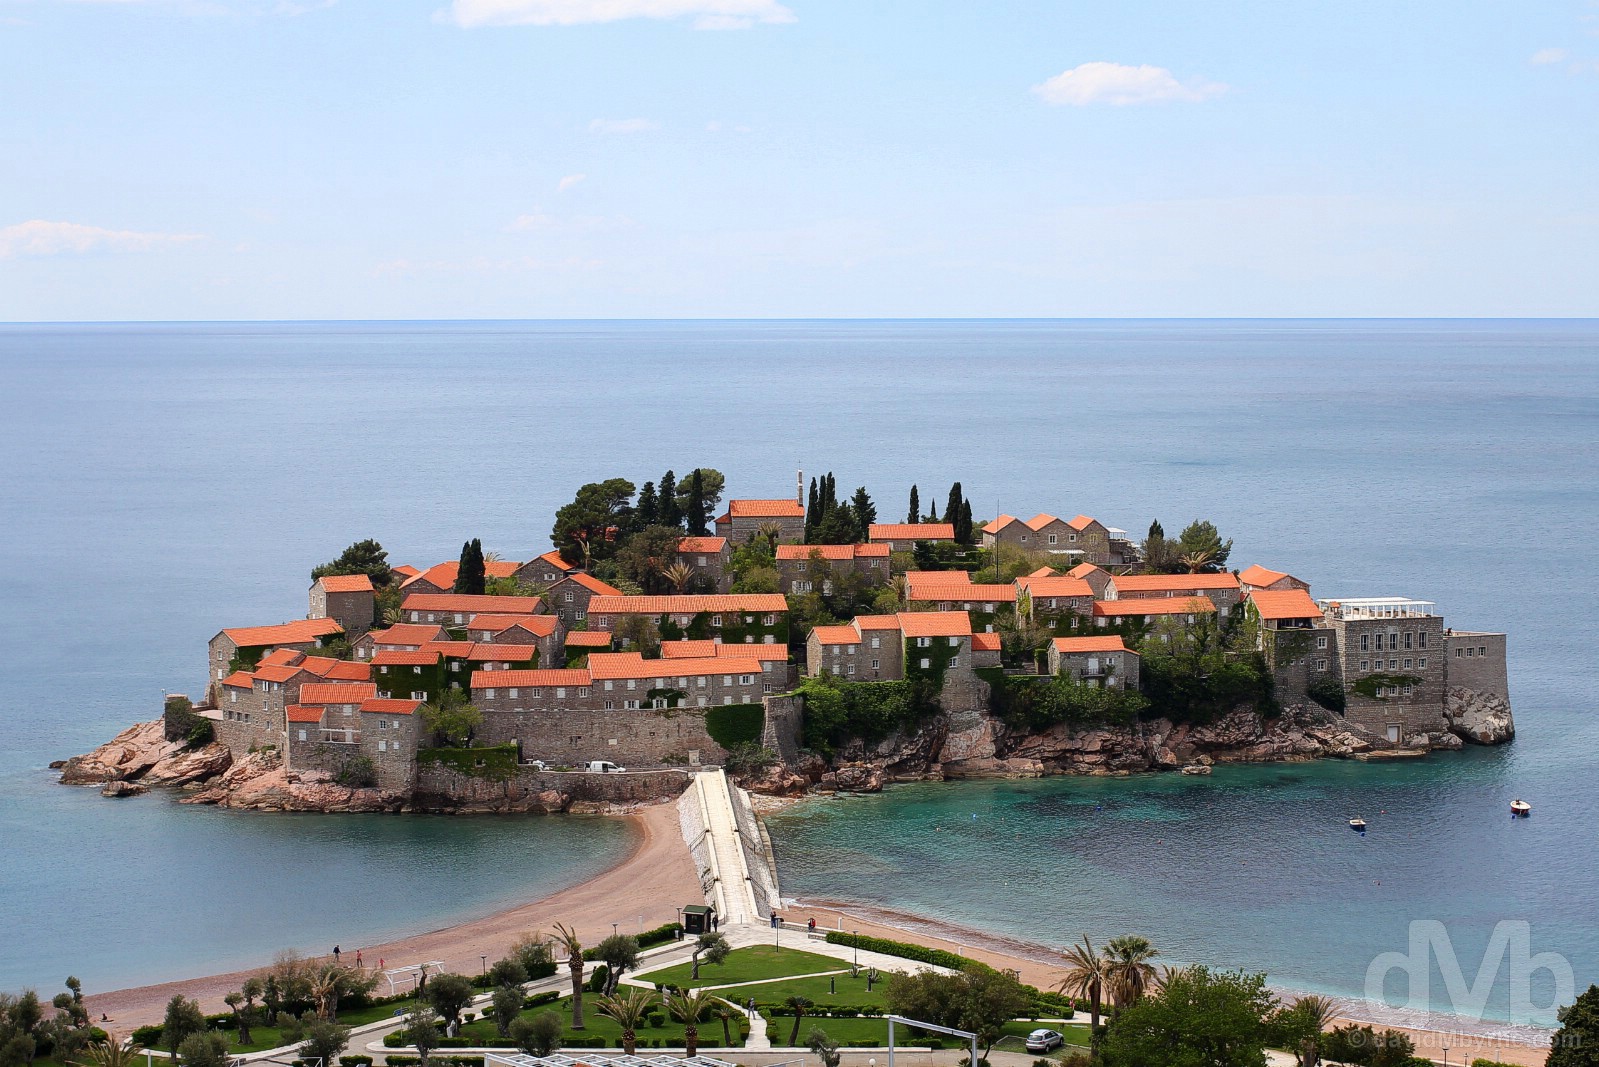 The uber-plush 5-star fortress resort island of Sveti Stefan as seen from the coastal-hugging E80, Budvanska Rivijera, Montenegro. April 21, 2017.